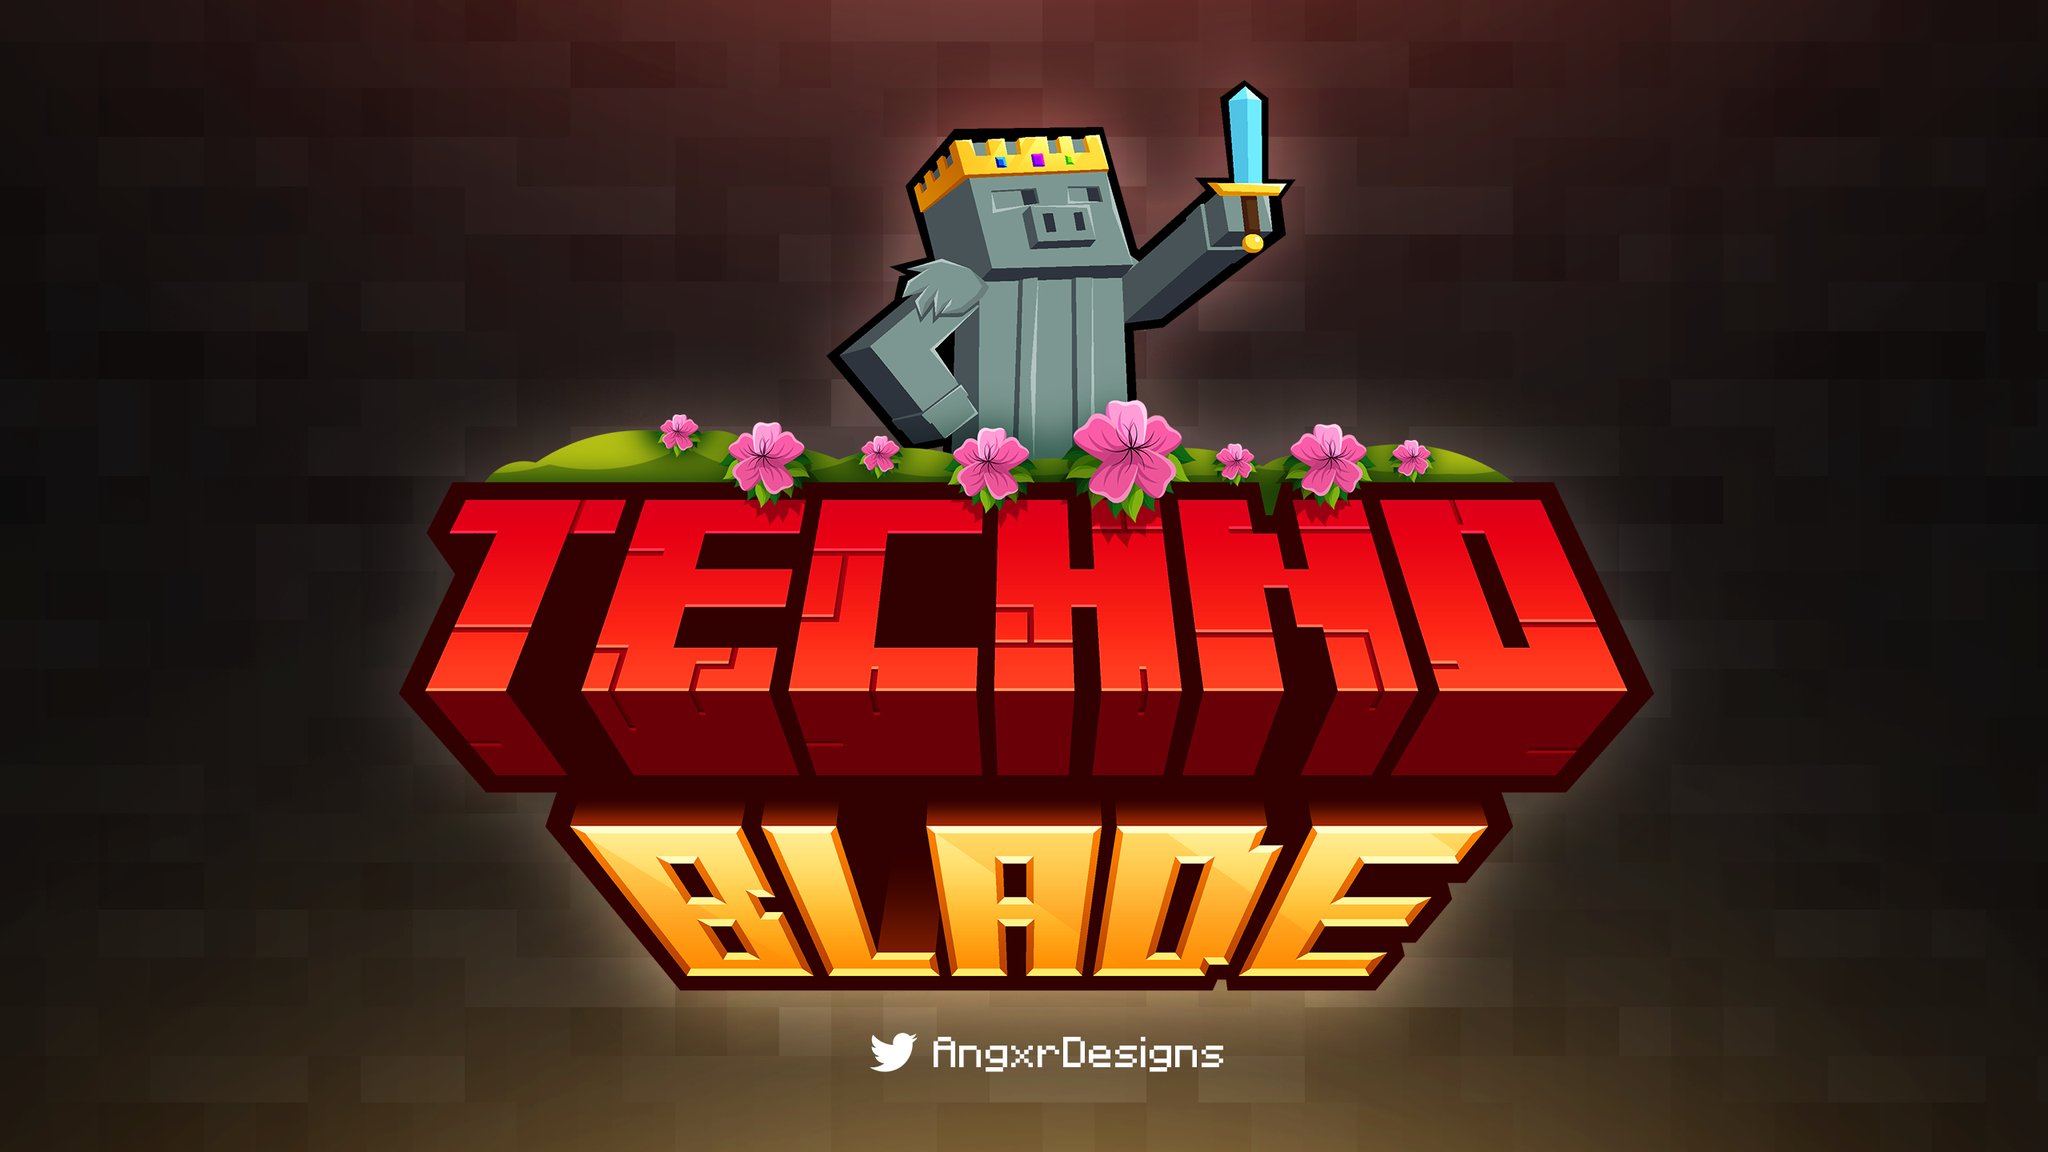 Technodad learns Minecraft; Technoblade Never Dies 